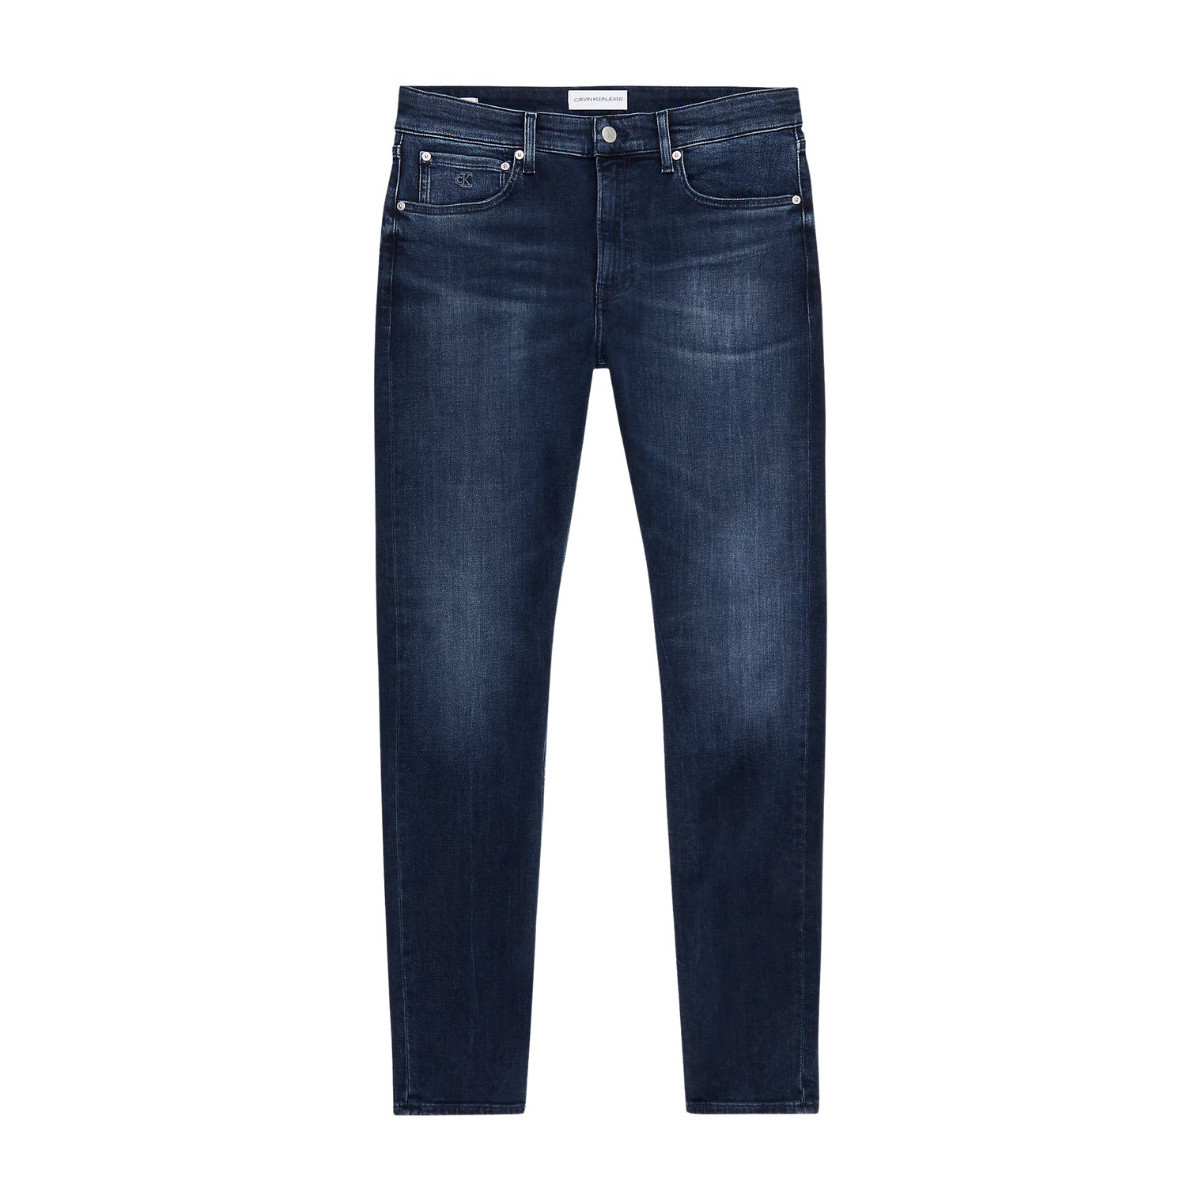 Vêtements Homme Jeans Calvin Klein Jeans Jean Homme Slim Fit  ref 53244 Denim Dark Bleu